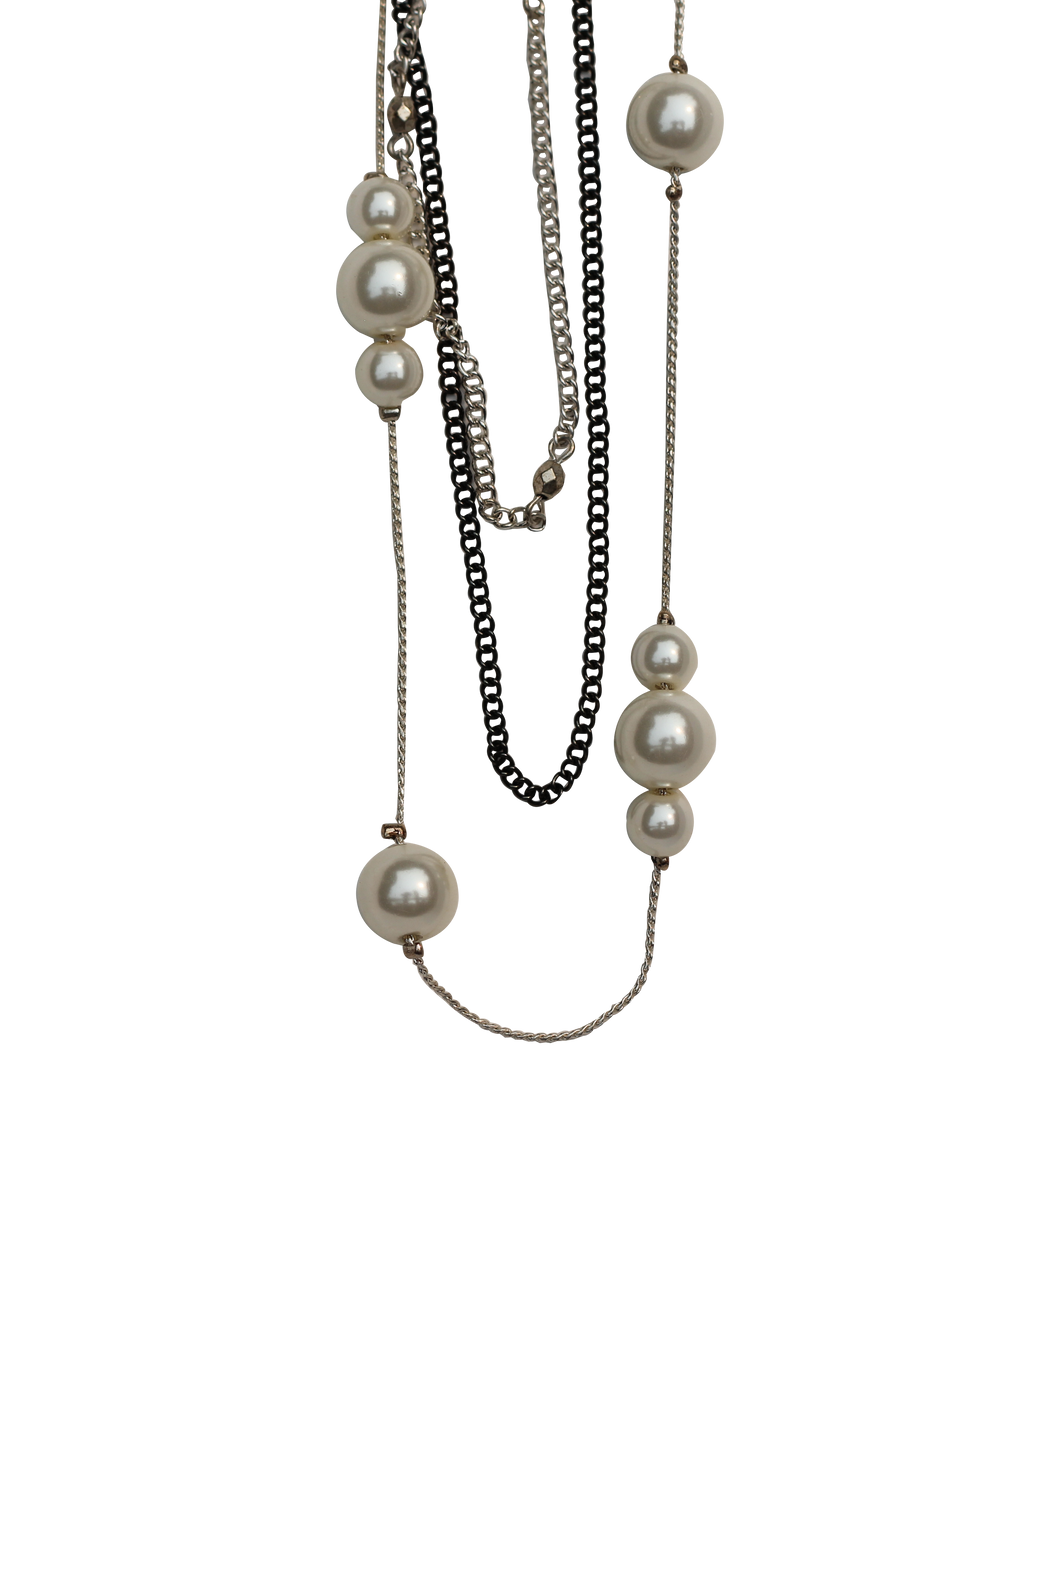 Pearls Galore